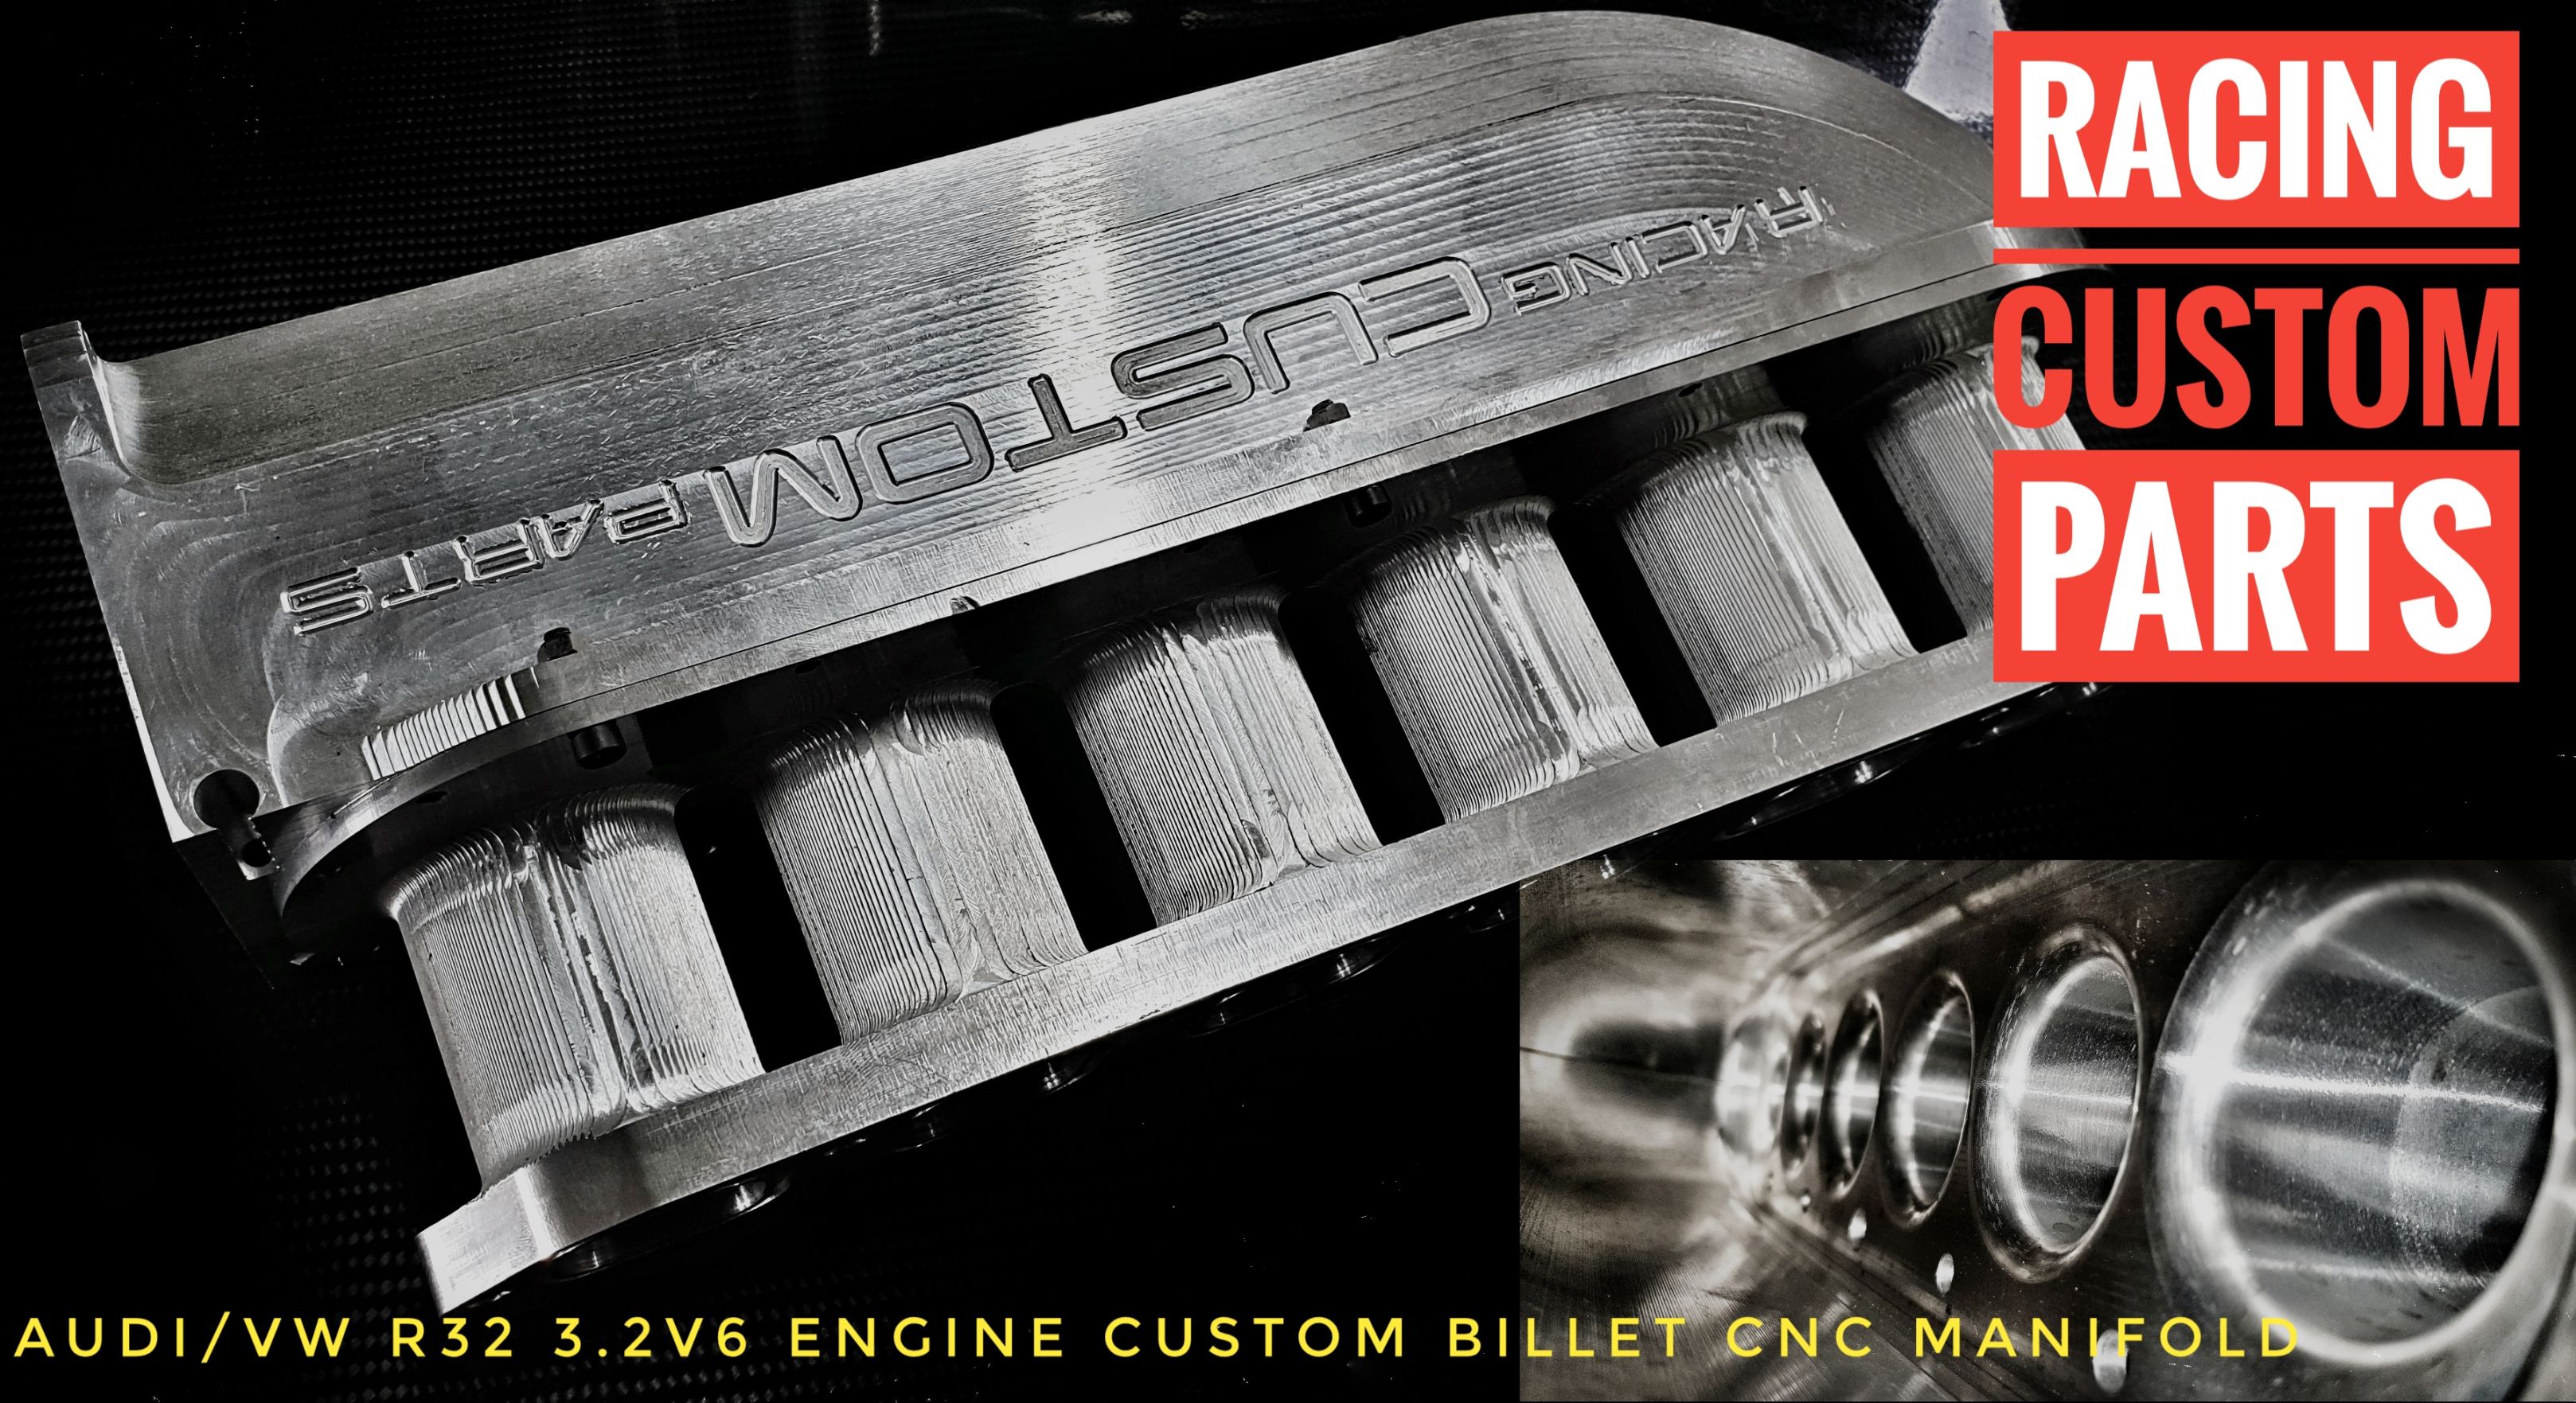 R32 3,2 V6 Audi / VW Billet cnc custom intake manifold turbo cnc racing custom parts